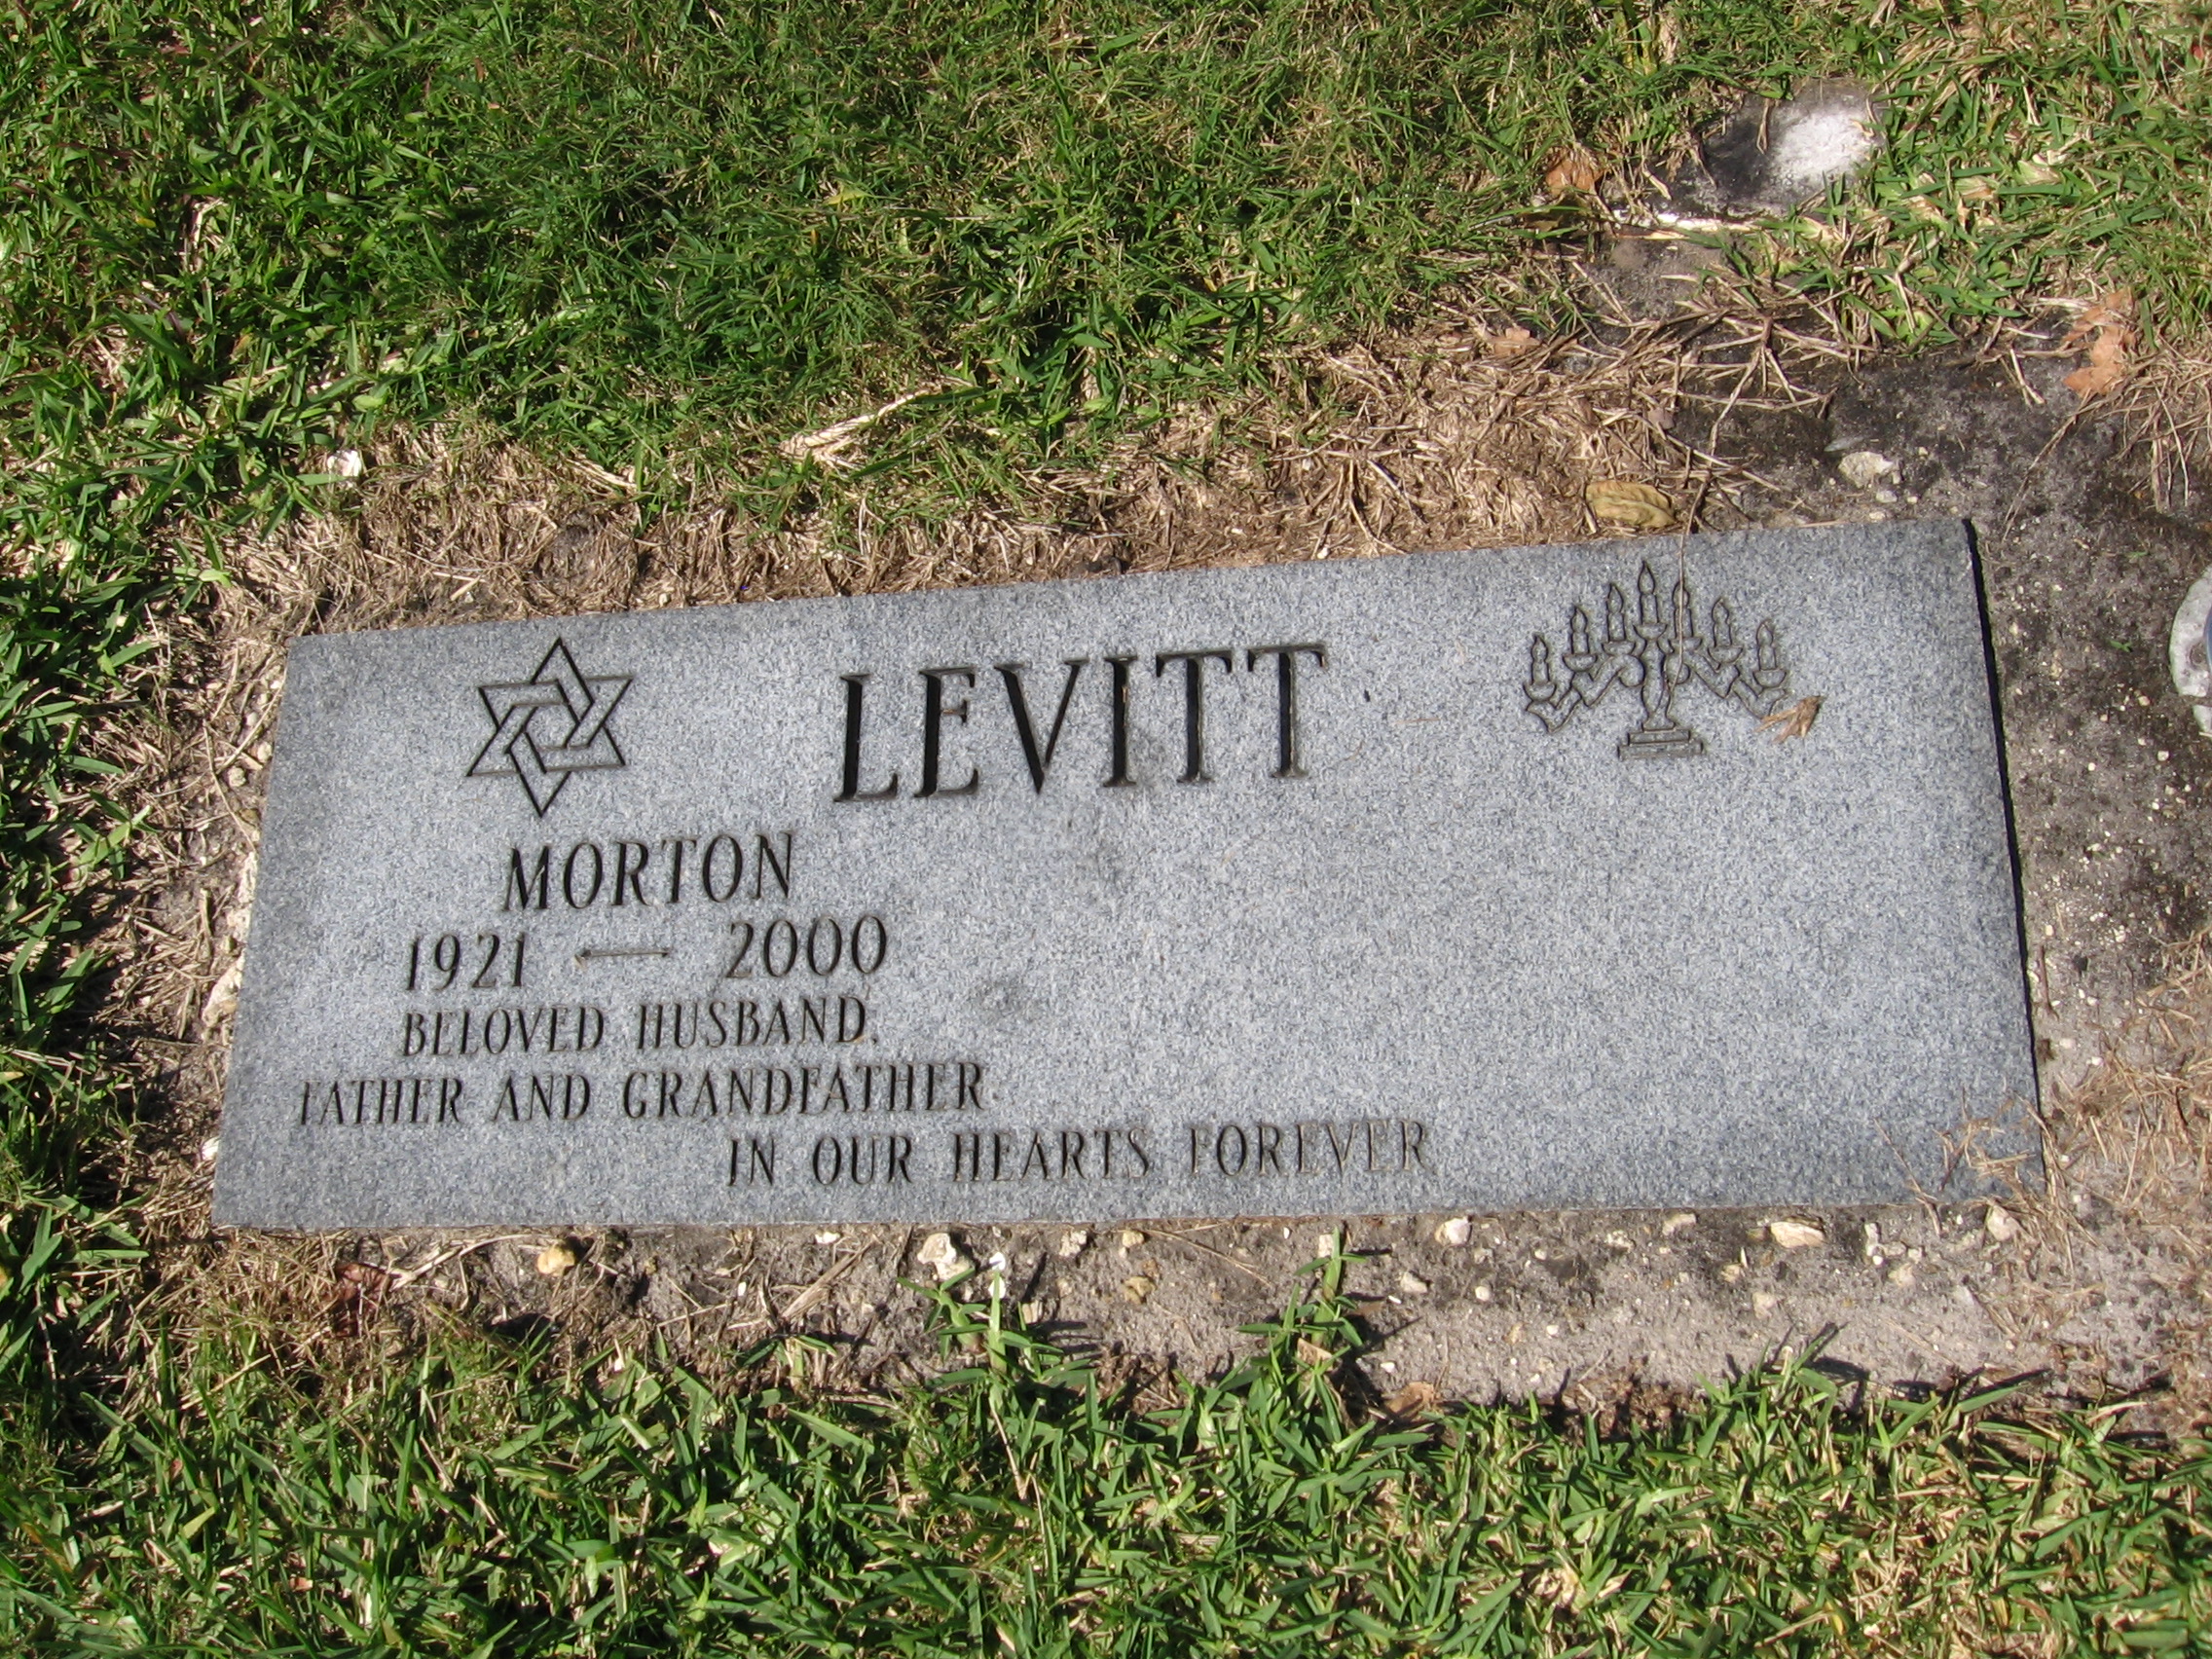 Morton Levitt